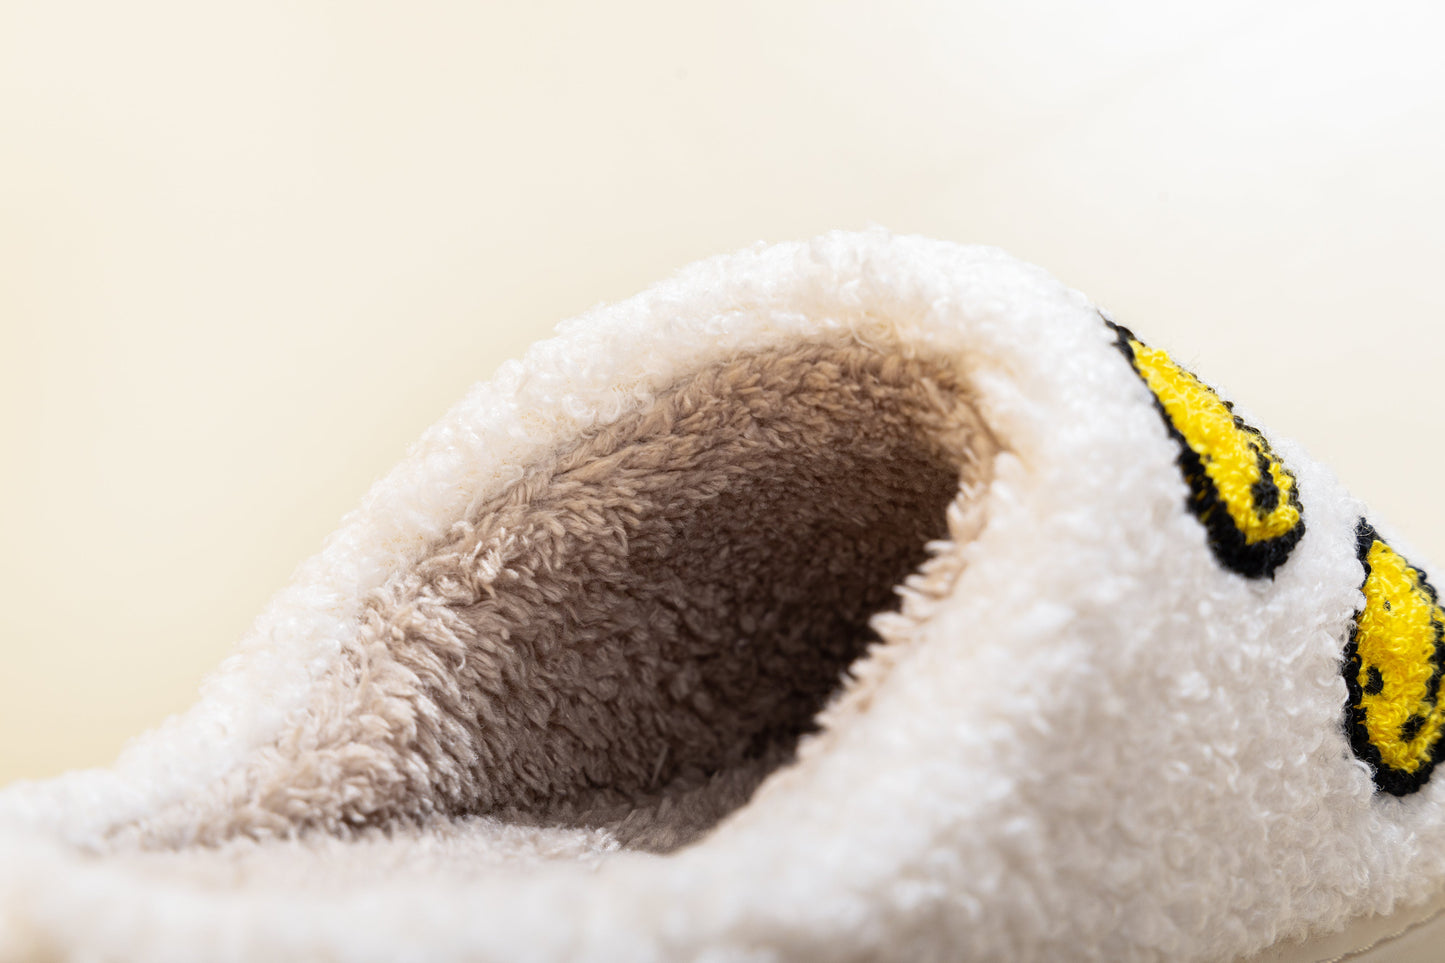 Smile Face Dot Illustrated Comfort Cozy Plush Fluffy Fur Slip On Cushion Slippers